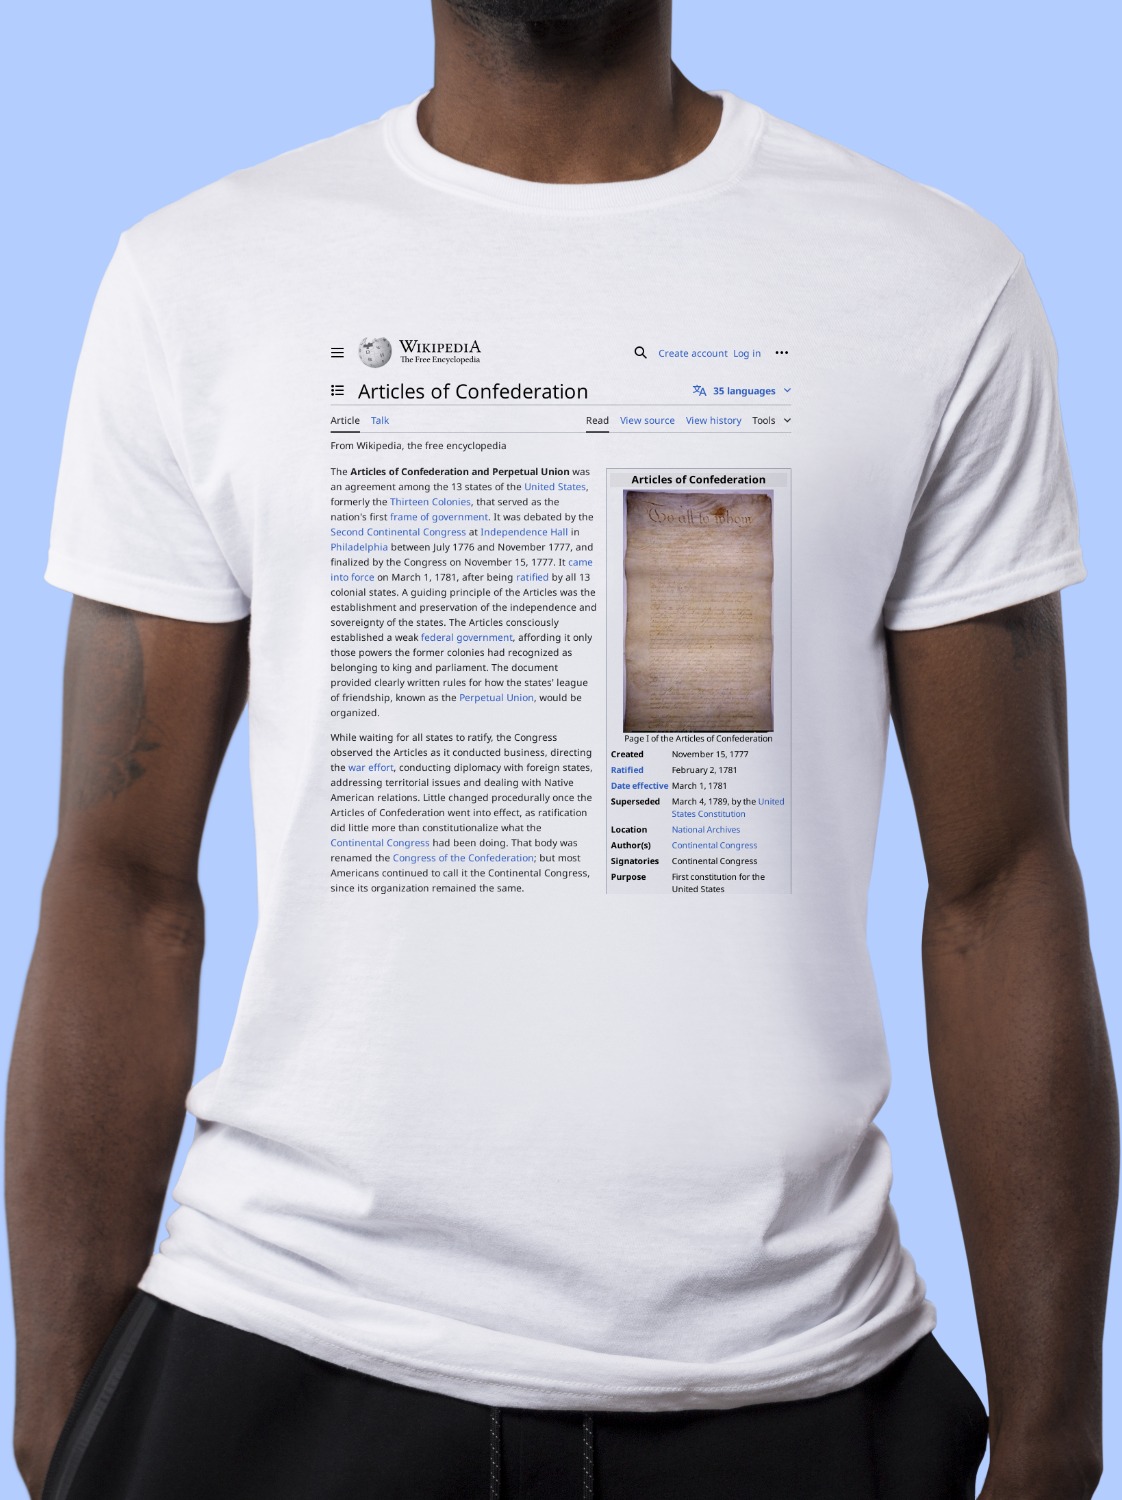 Articles_of_Confederation Wikipedia Shirt